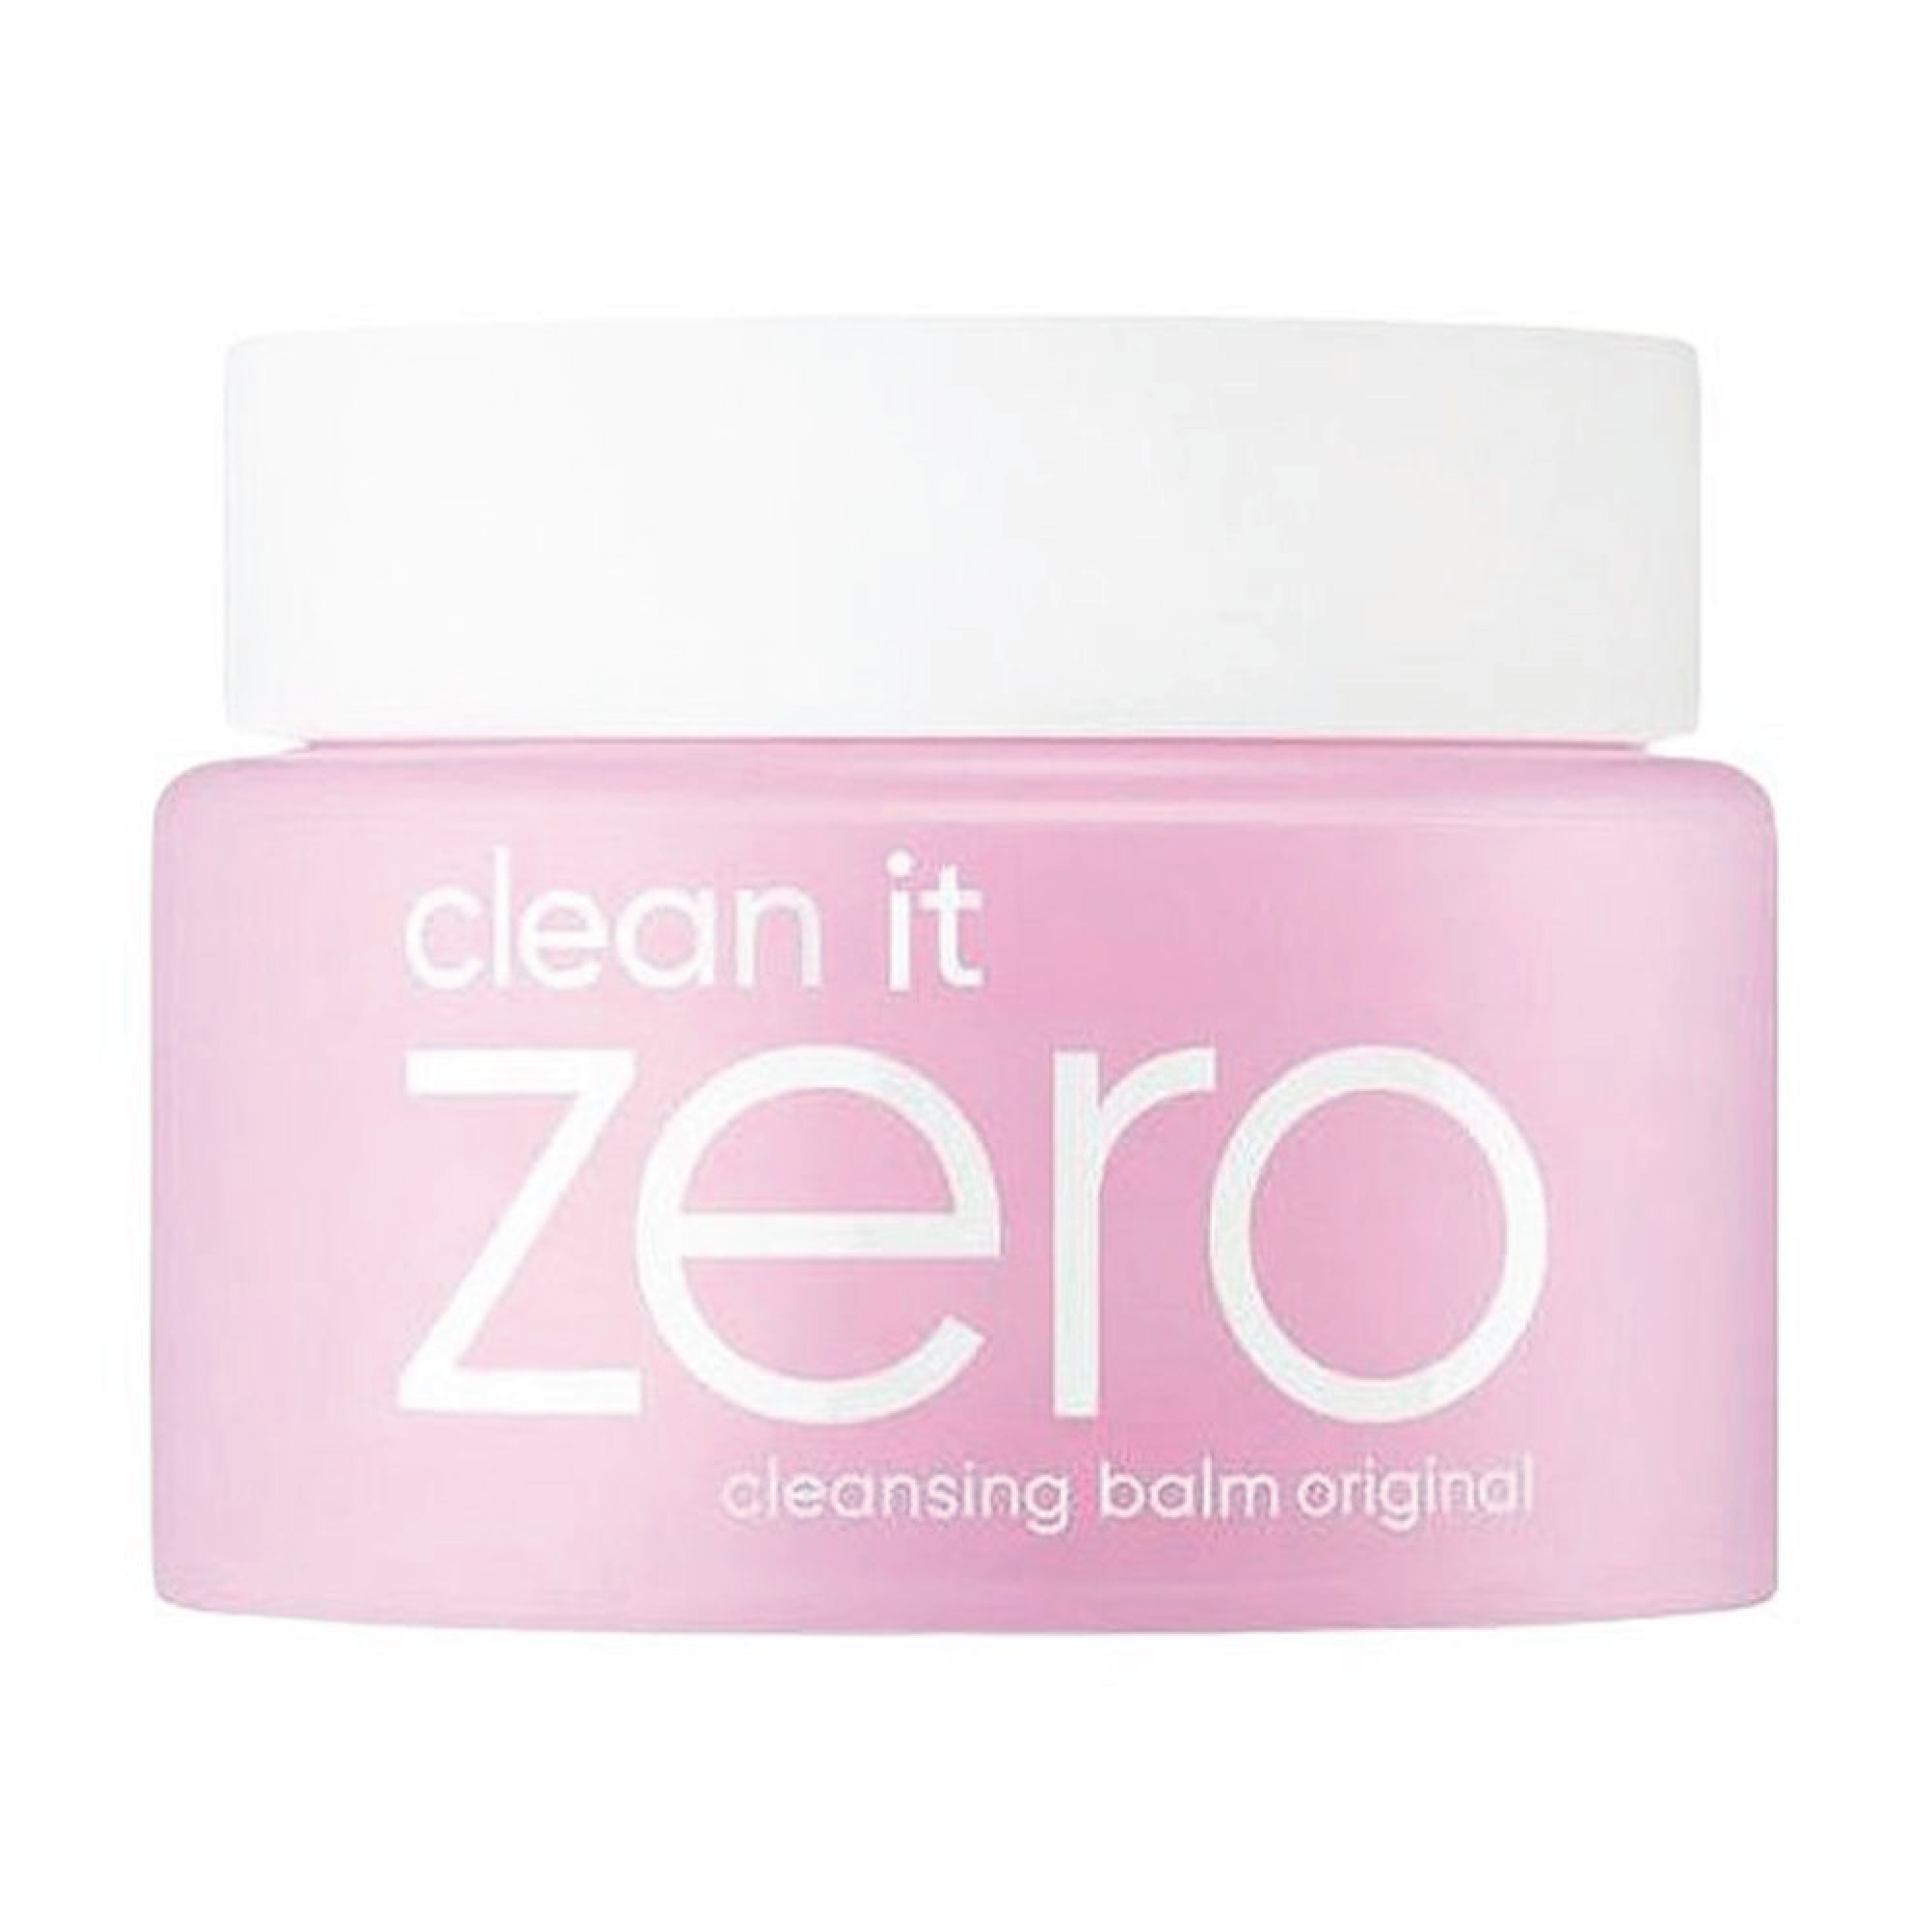 Banila Co Clean It Zero Cleansing Balm Original, 25 ml